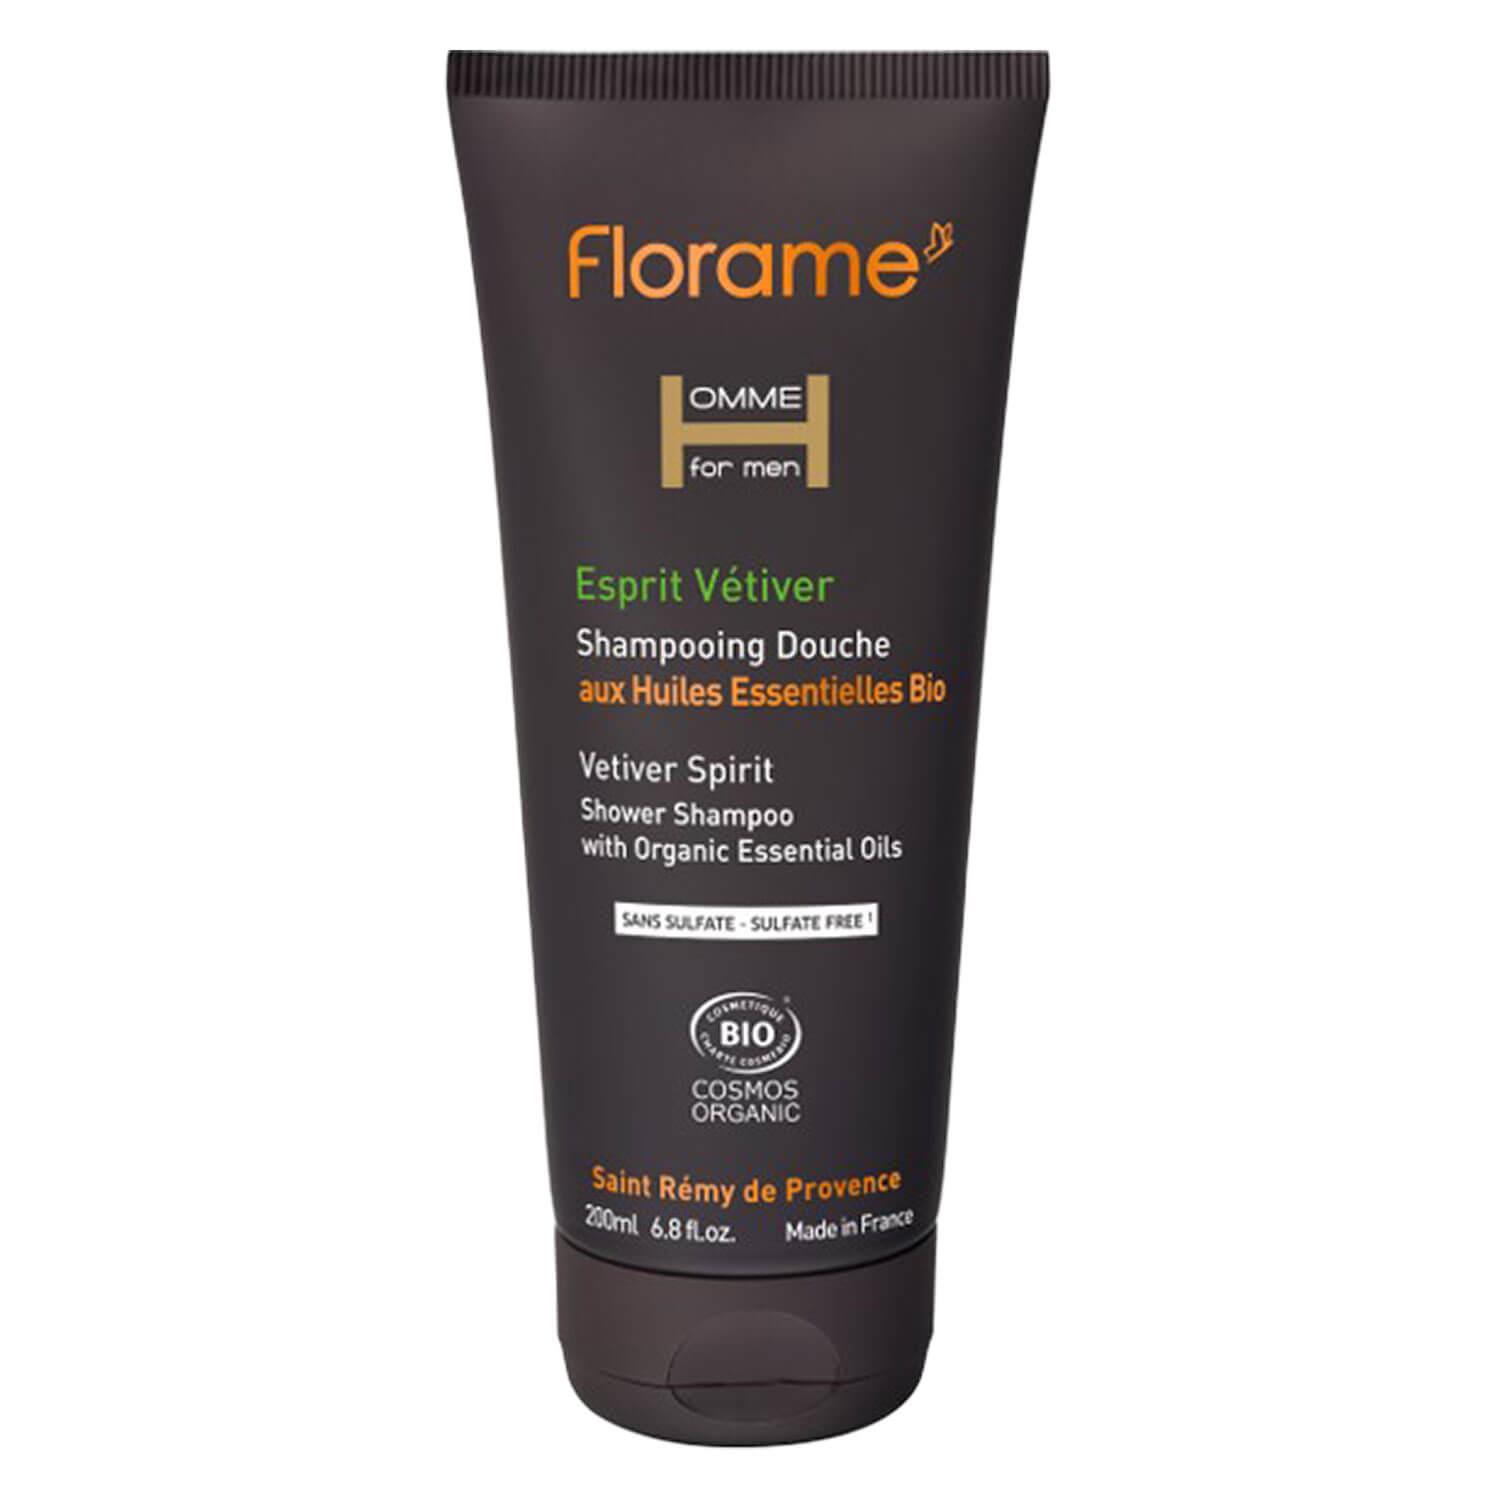 Florame Homme - Vetiver Spirit Shower Shampoo